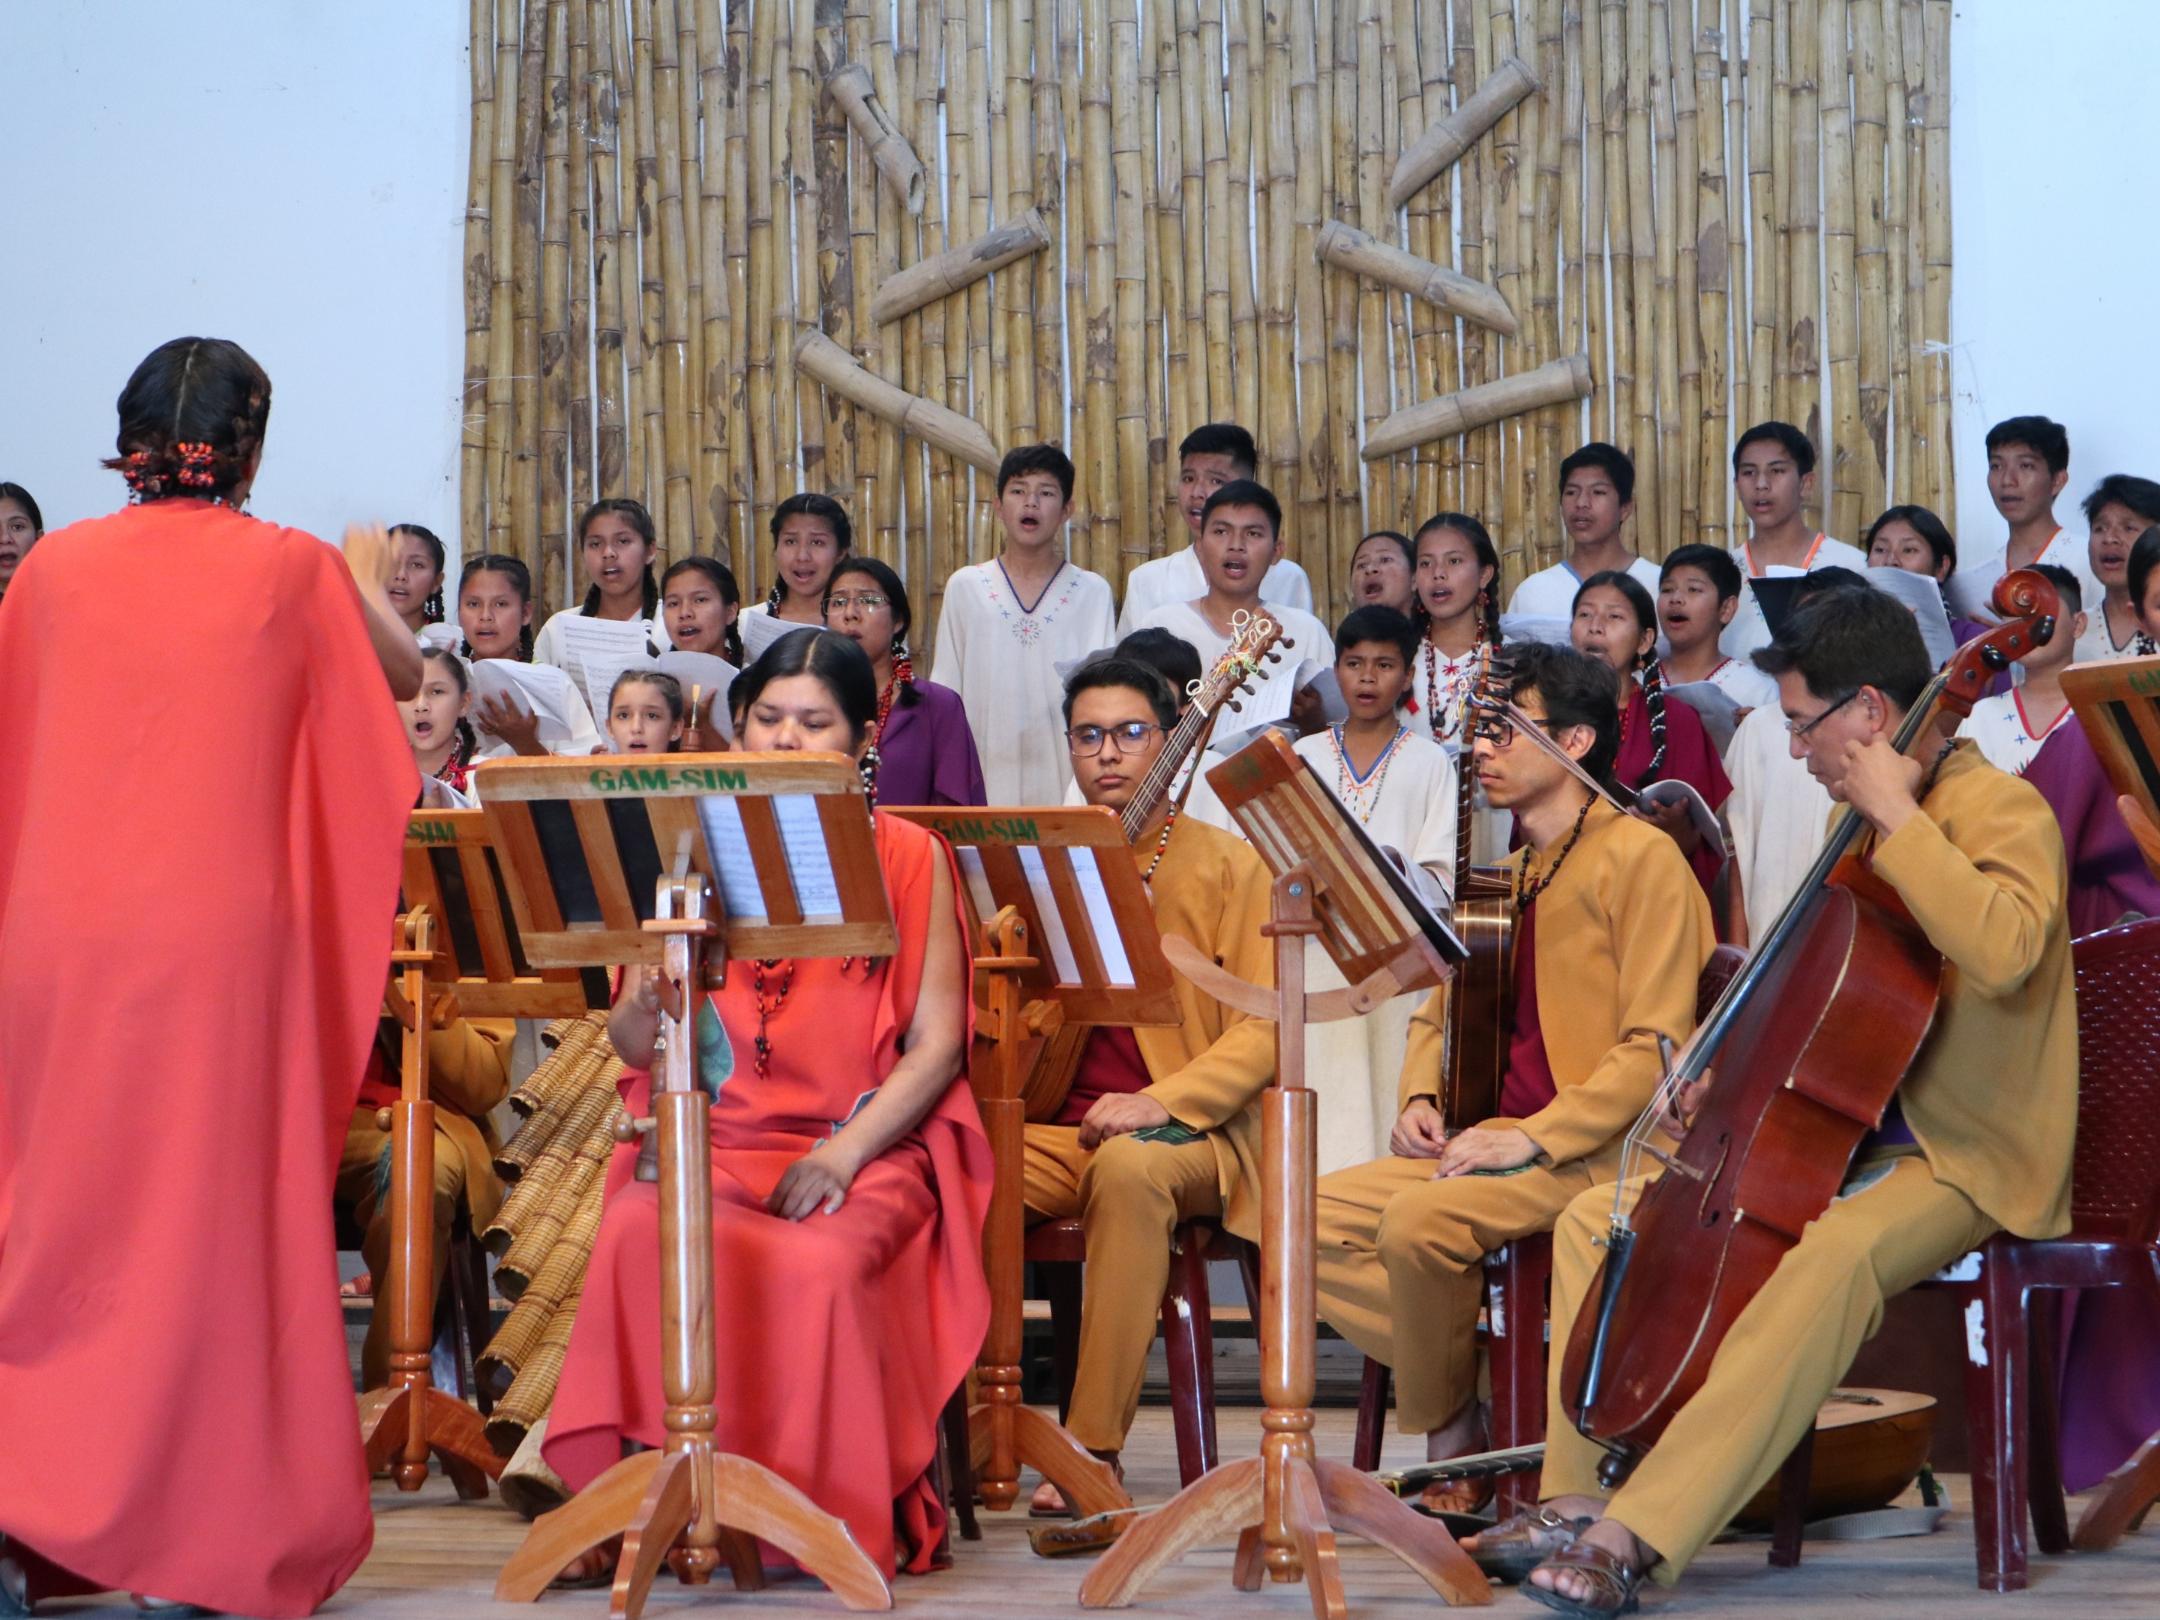 Ein Erlebnis - die Musikschule in San Ignacio de Moxos.